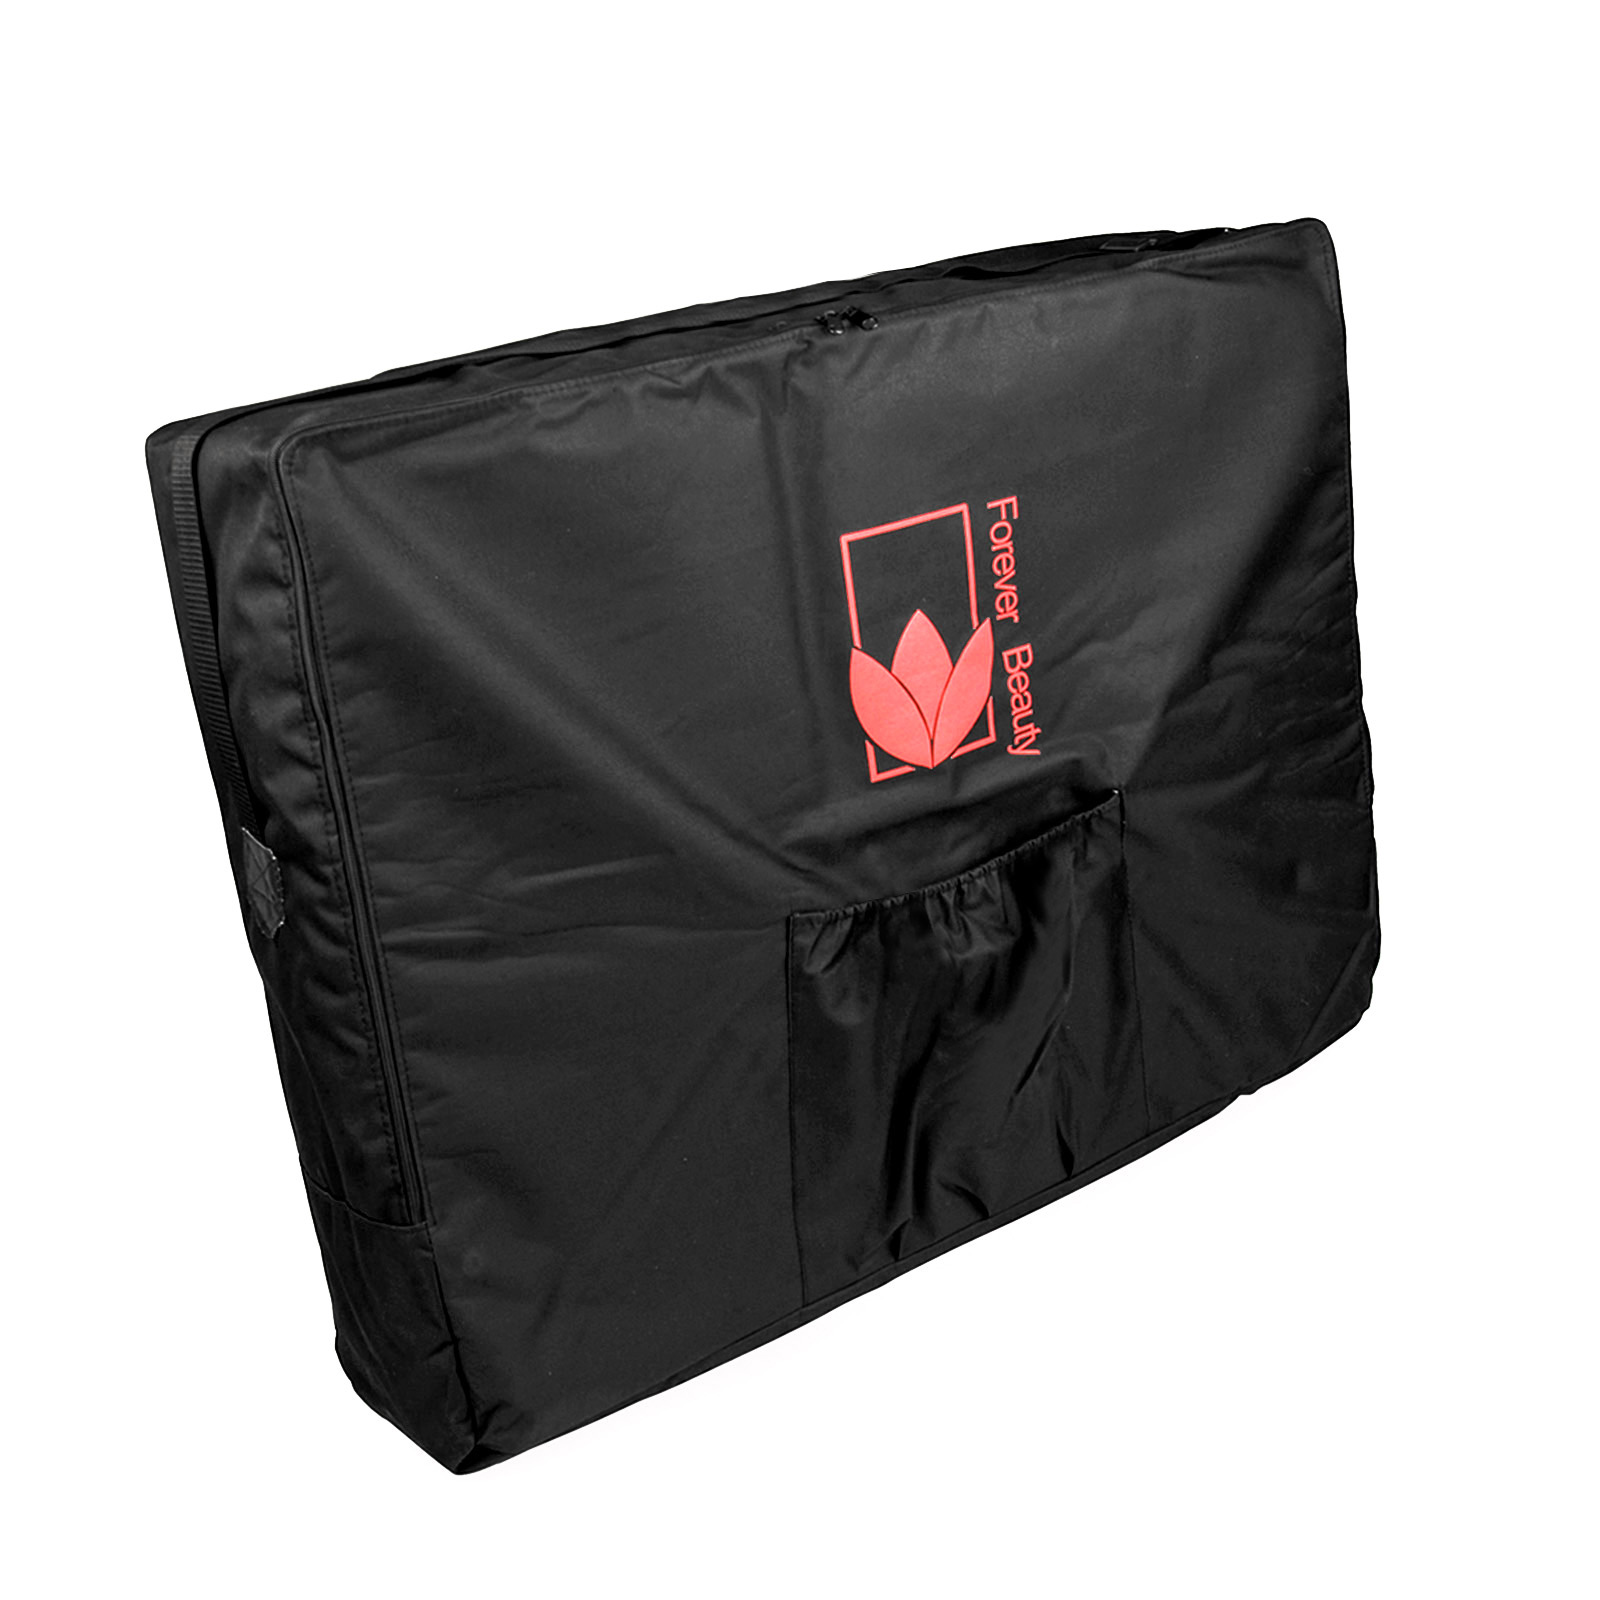 70cm Massage Table Carry Bag - BLACK